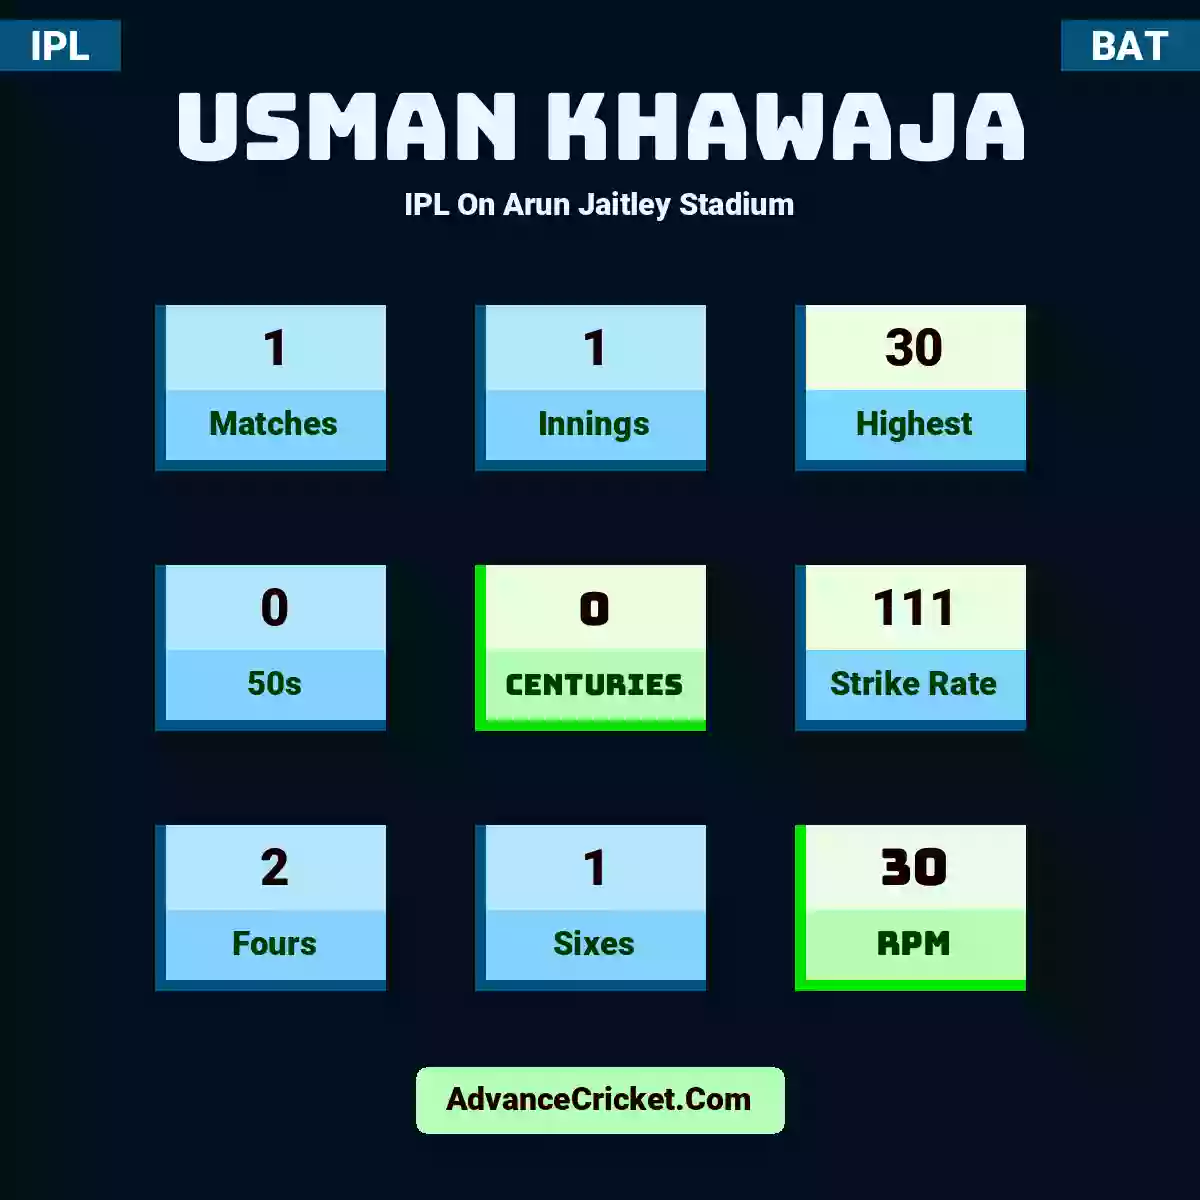 Usman Khawaja IPL  On Arun Jaitley Stadium, Usman Khawaja played 1 matches, scored 30 runs as highest, 0 half-centuries, and 0 centuries, with a strike rate of 111. U.Khawaja hit 2 fours and 1 sixes, with an RPM of 30.